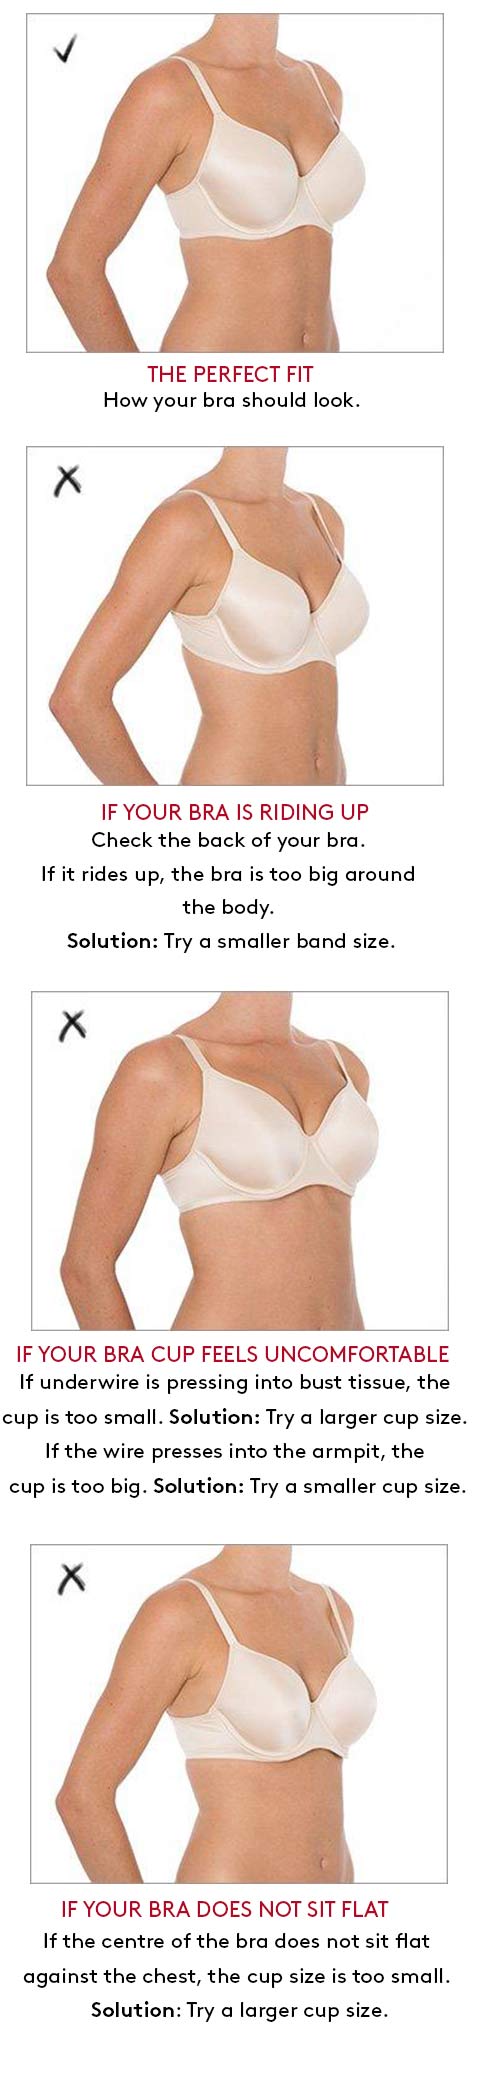 Bra fit problems and solutions  Bra fitting, Proper bra fitting, Bra hacks